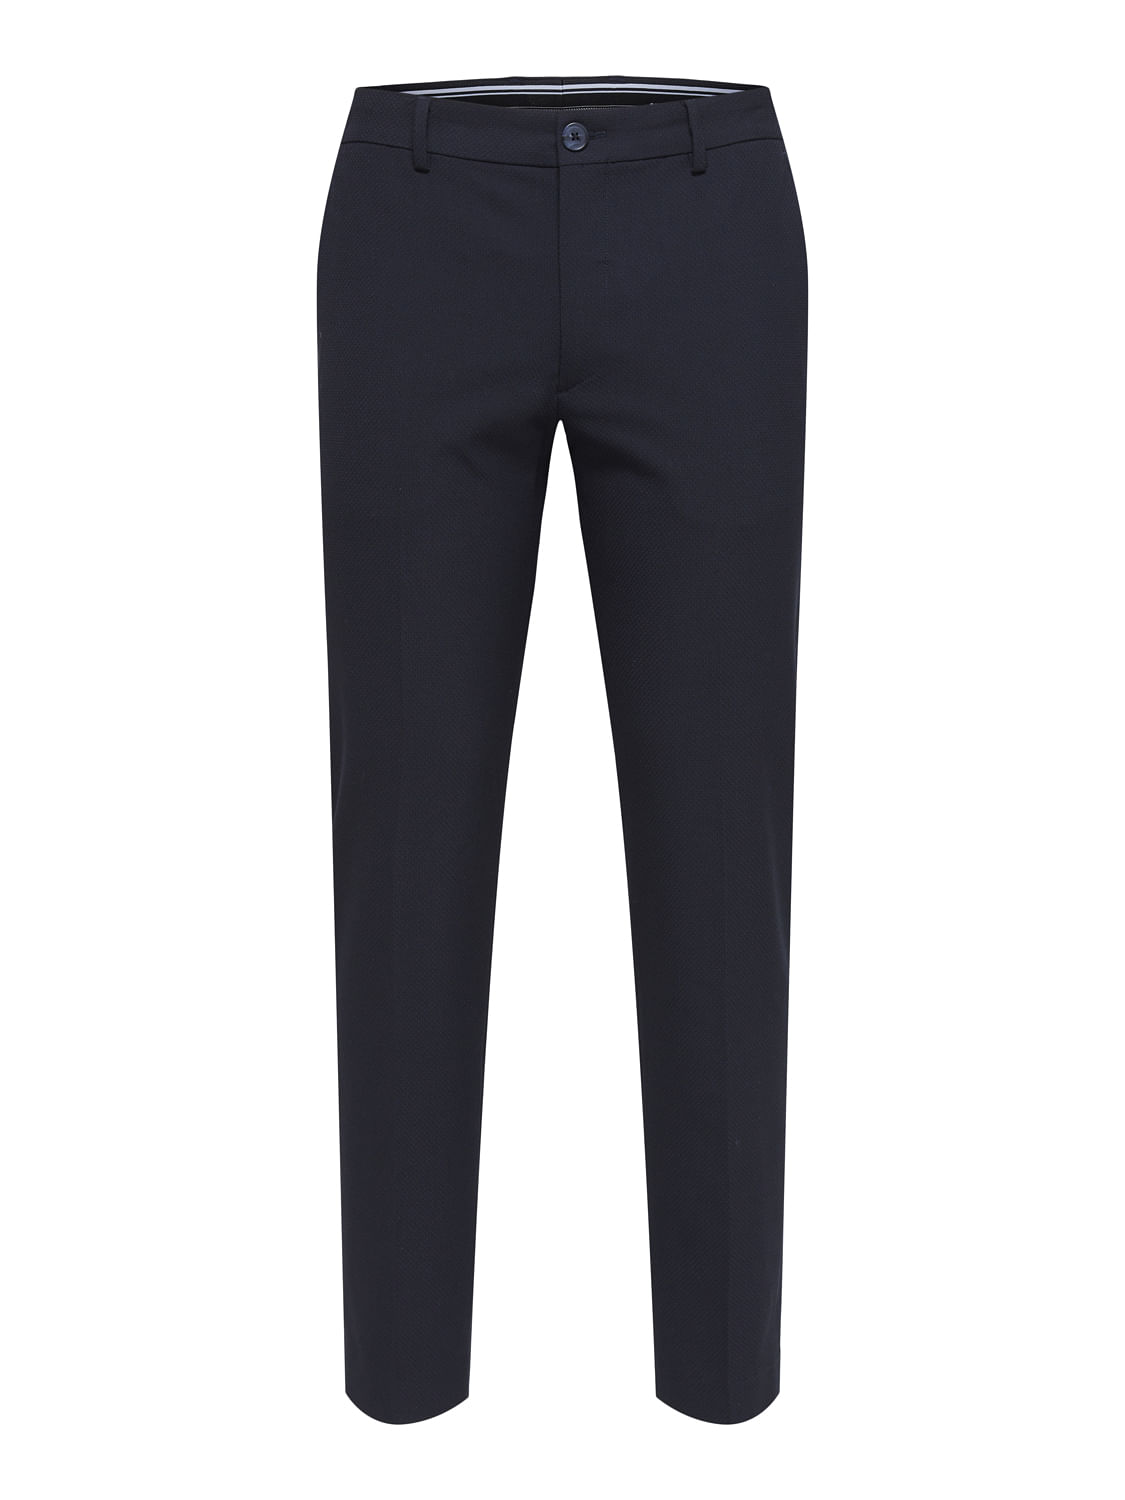 Filippa K HENRY TAILORED TROUSERS - Trousers - french navy/dark blue -  Zalando.de